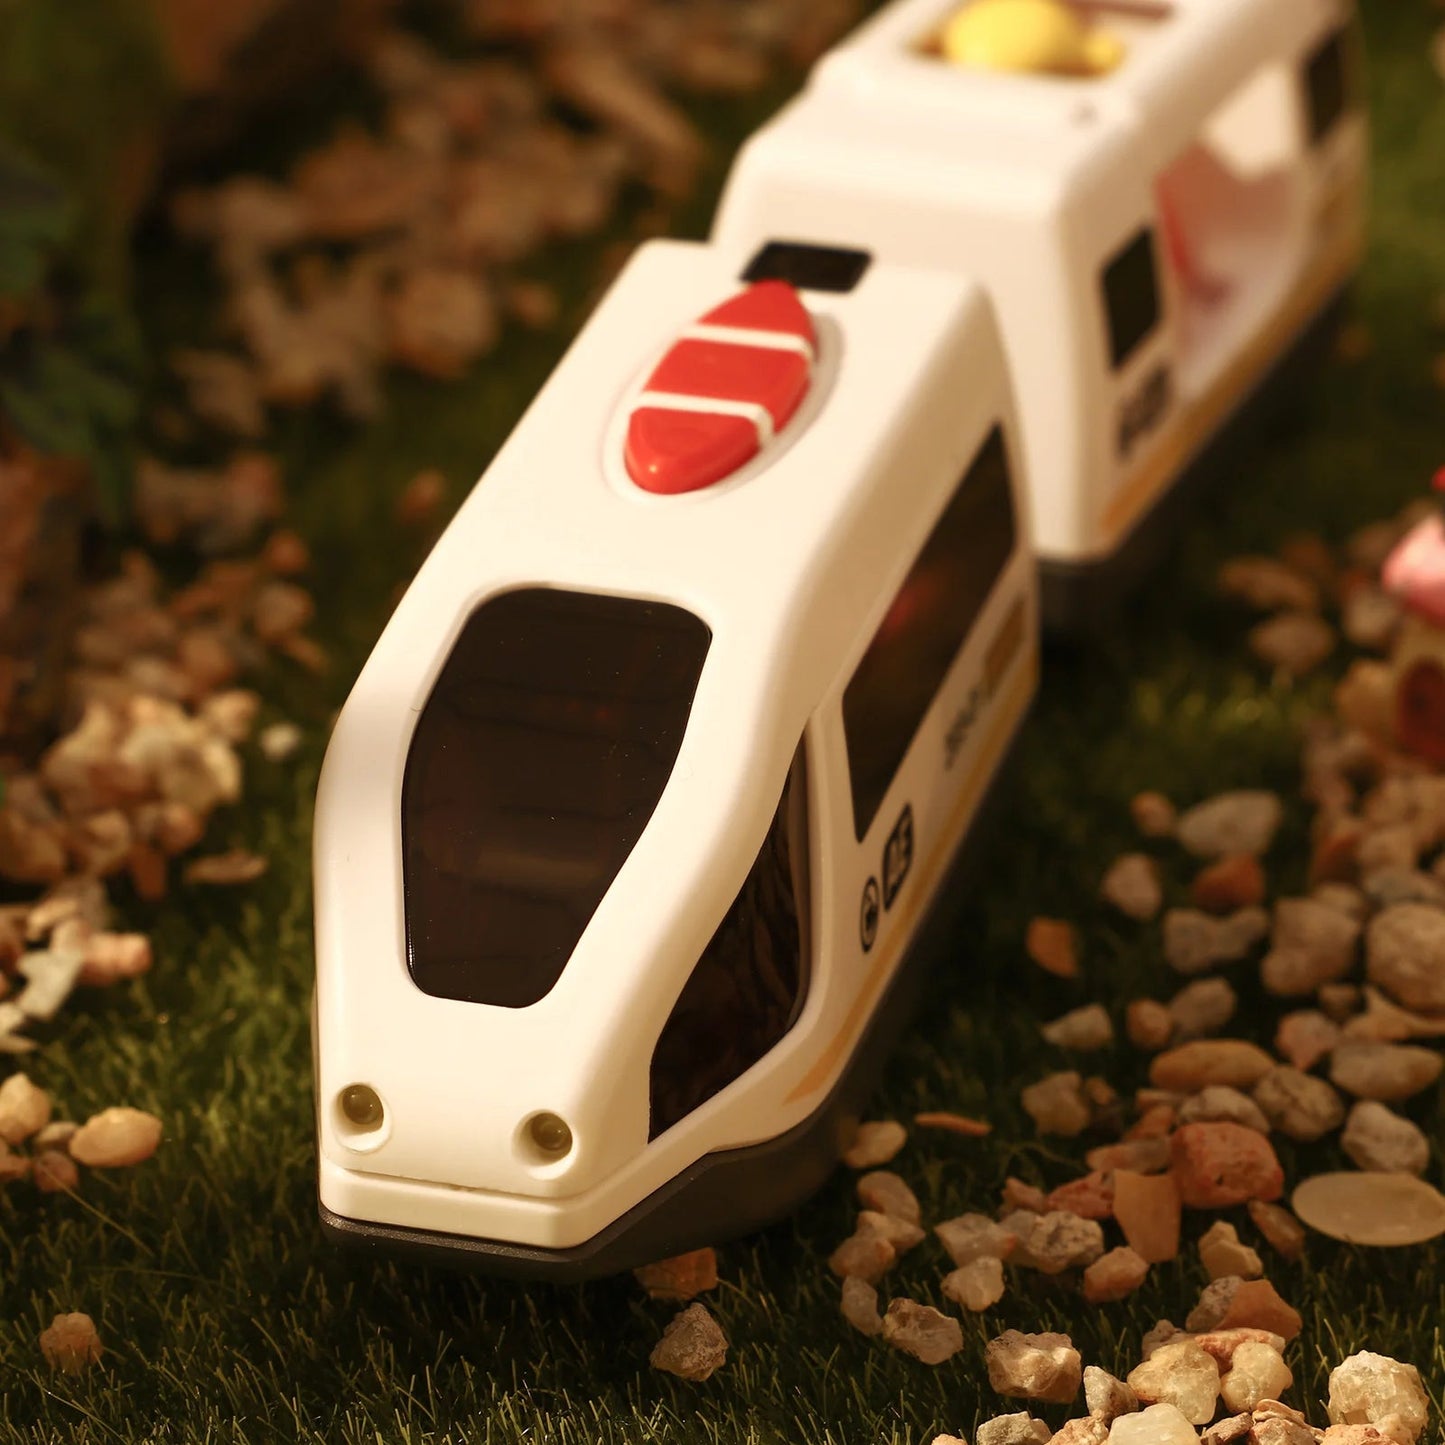 STOBOK Electric Train Model Toy for Children - ToylandEU